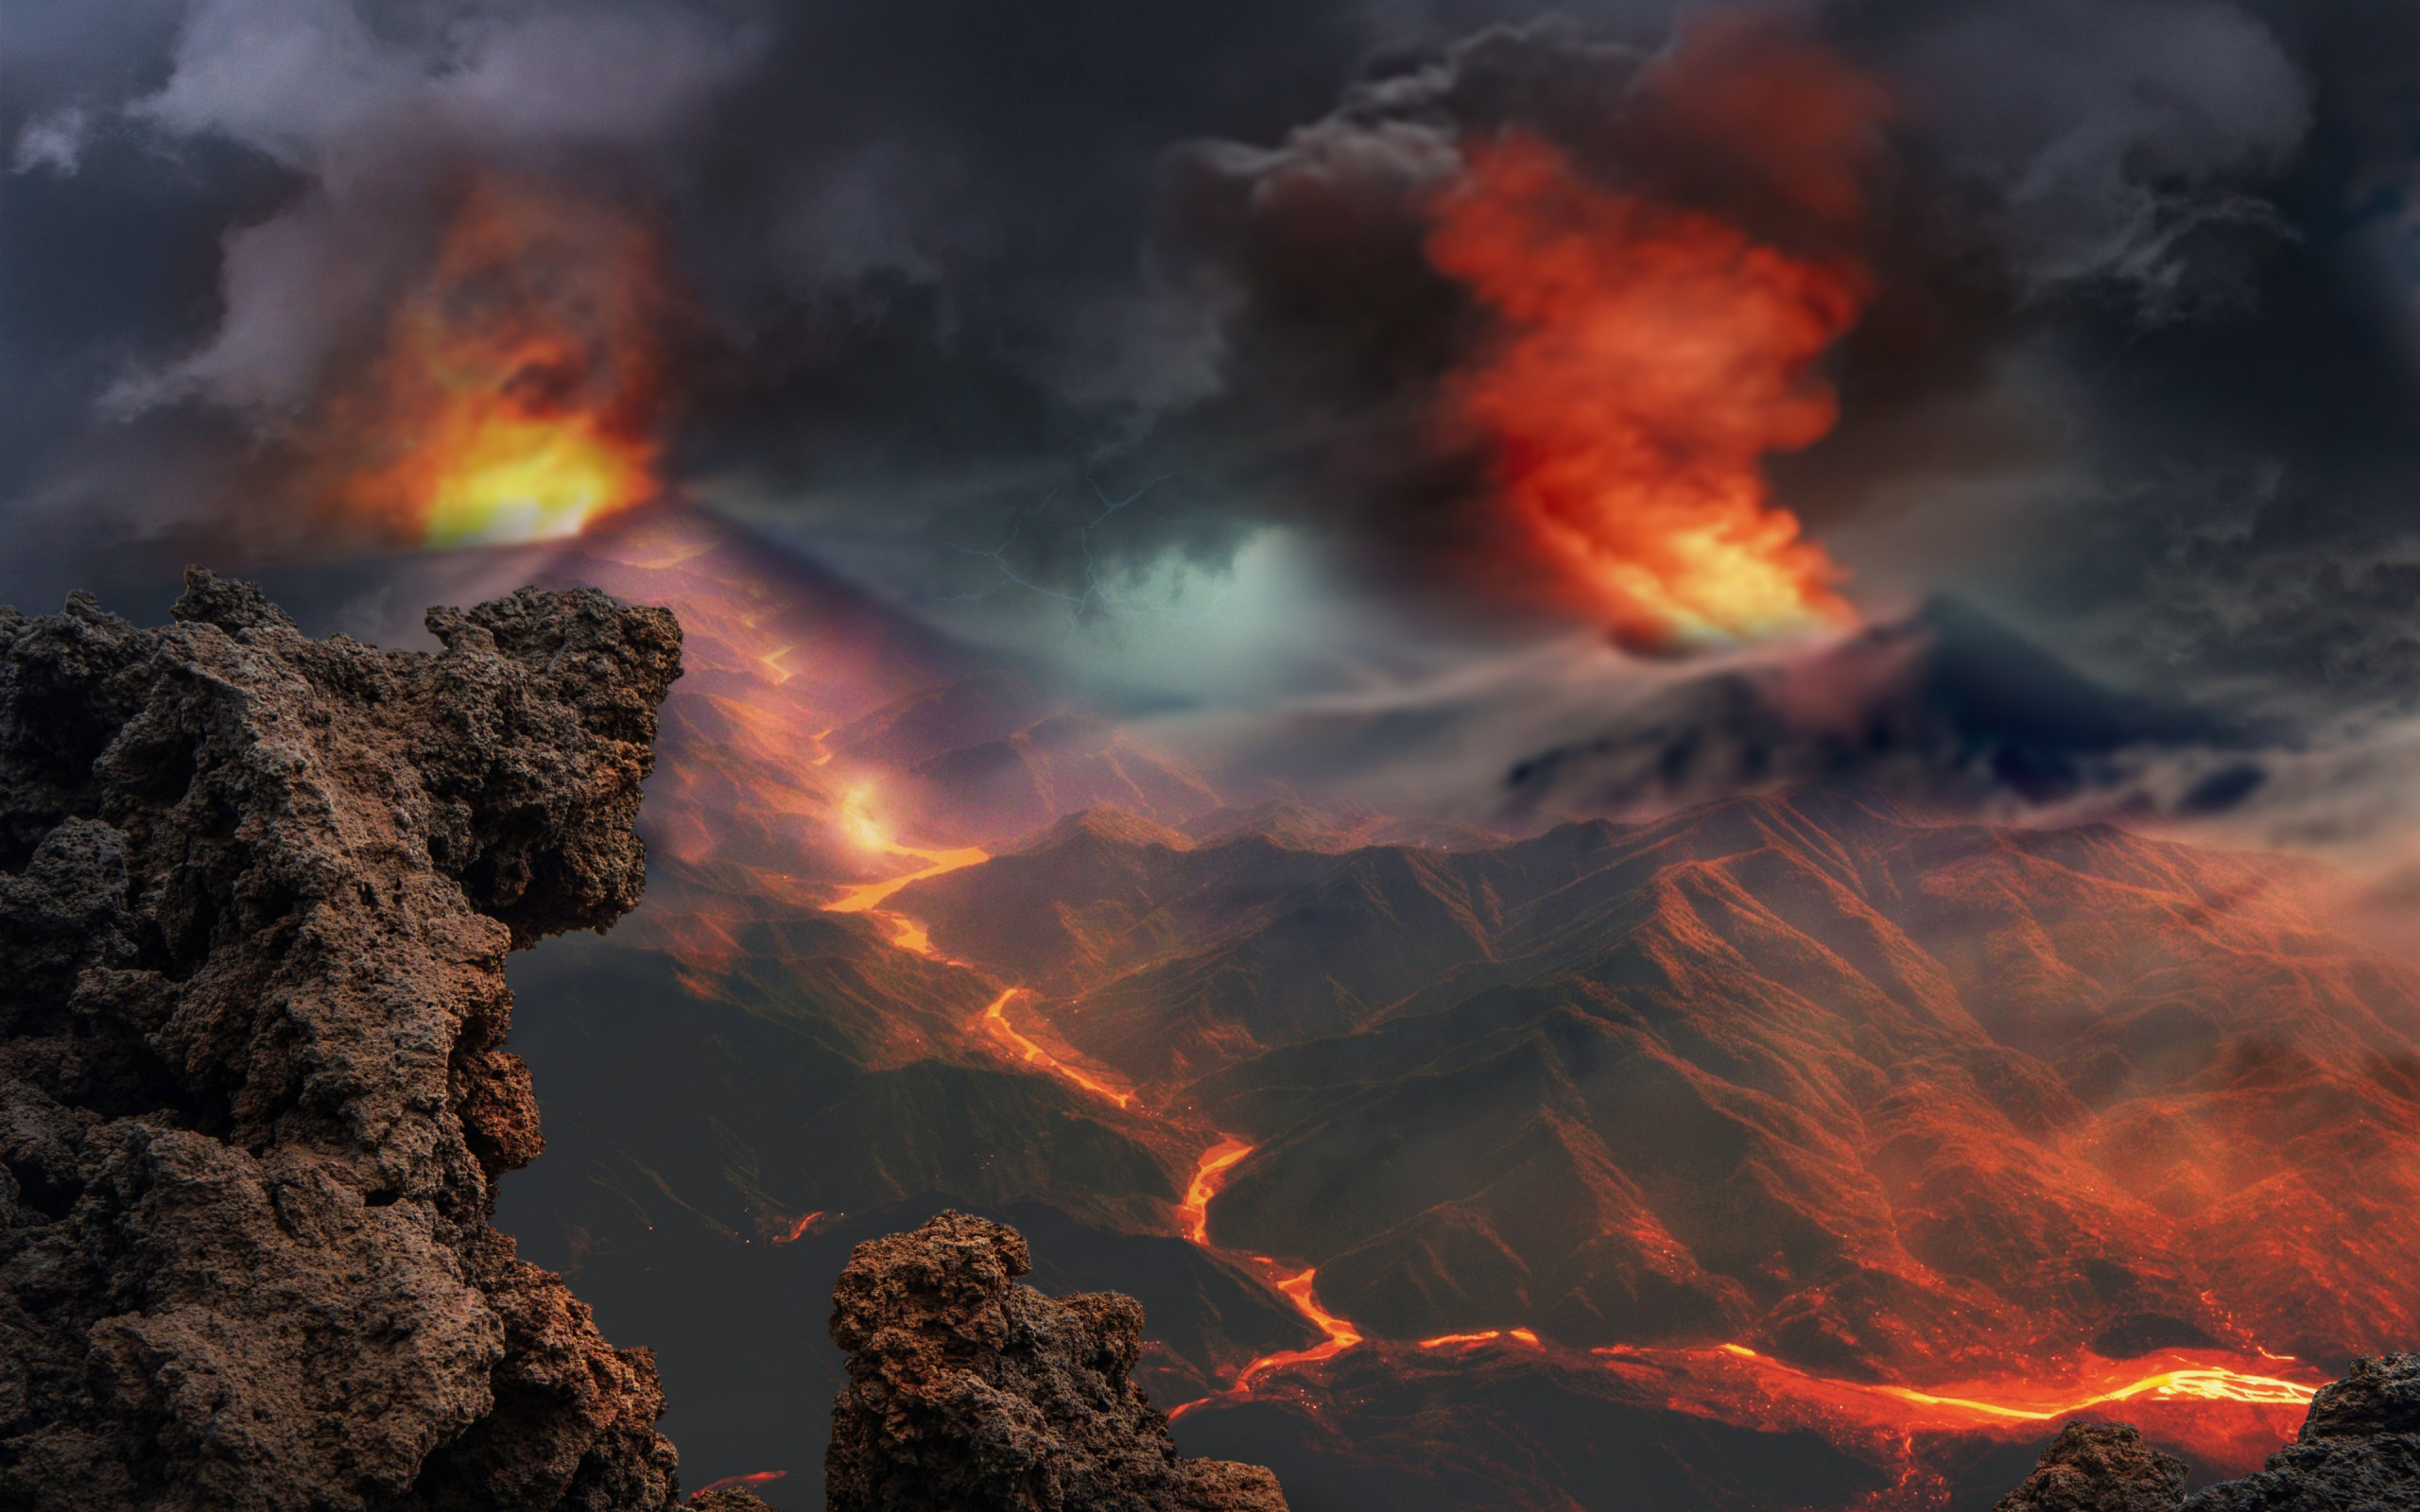 Download wallpaper: Volcanoes eruption and lava flow 2560x1600